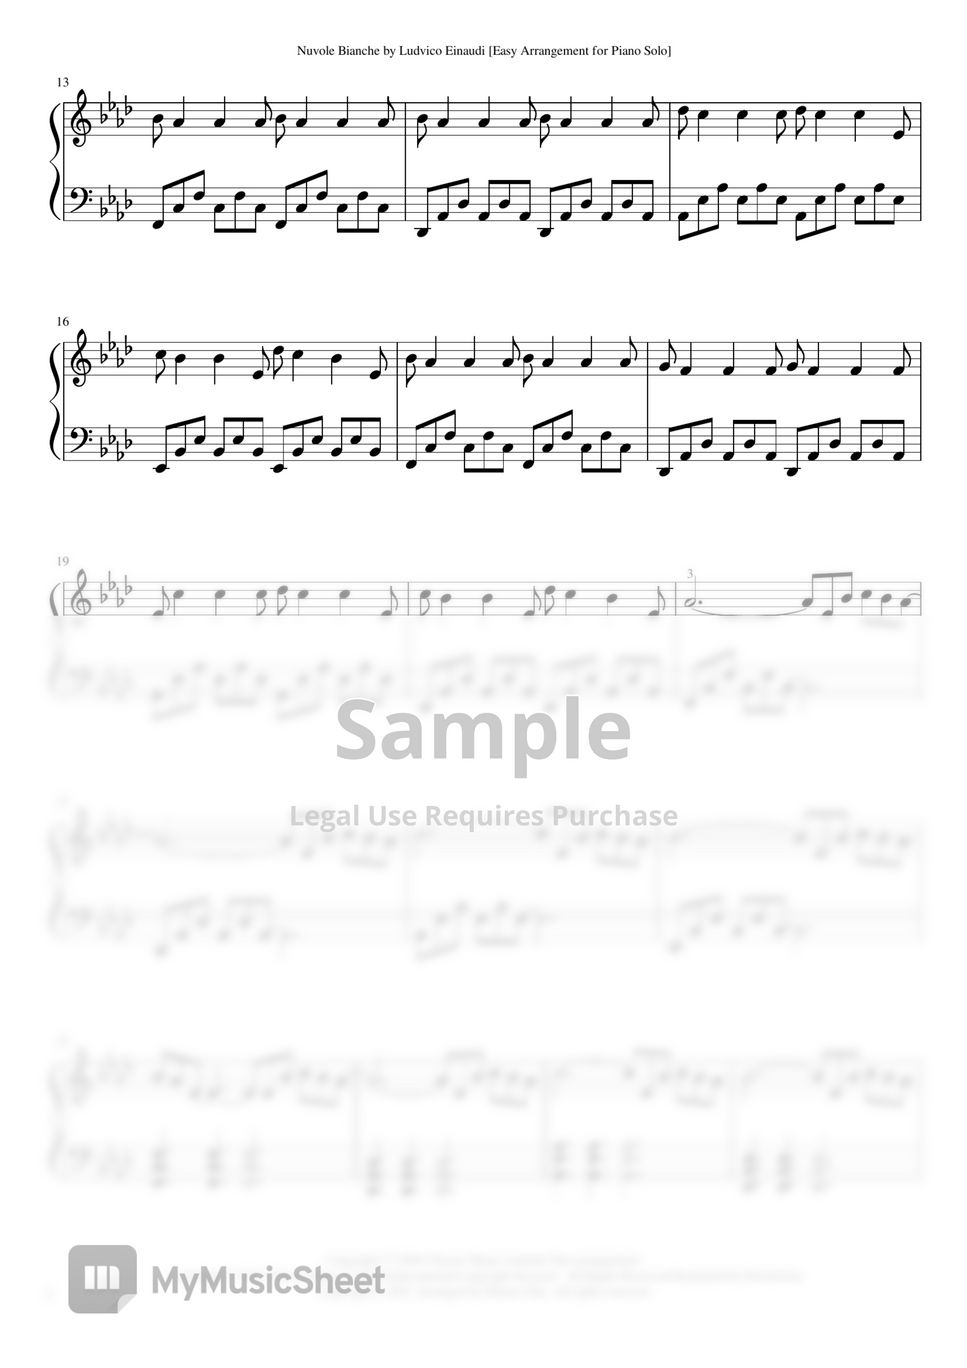 Ludovico Einaudi - "Nuvole Bianche" in Original Key (Easy Version) by YANGCHO